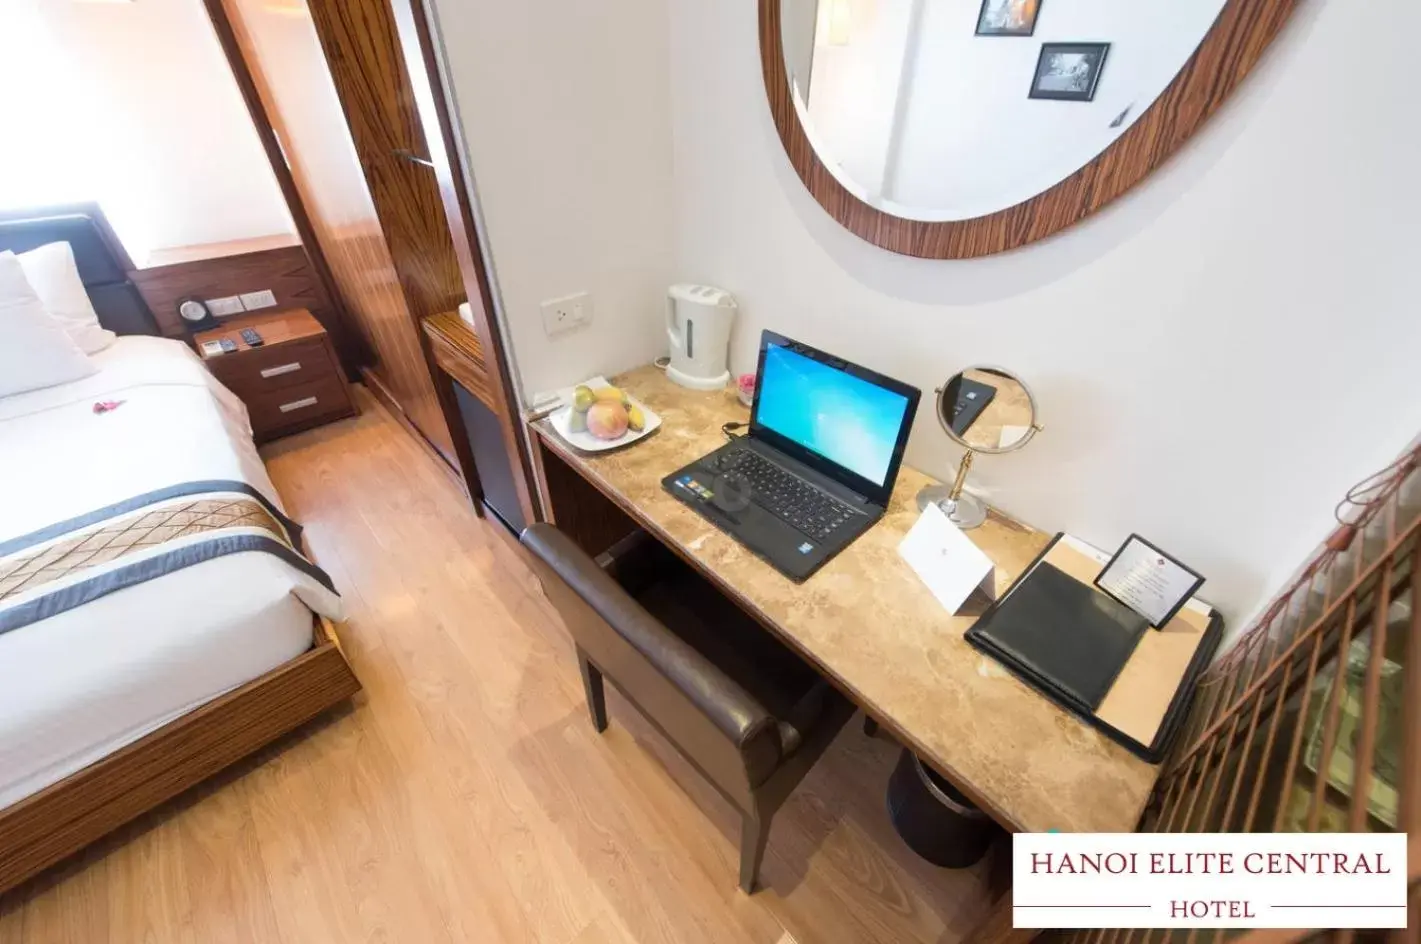 Area and facilities in Elite Central Hotel Hanoi